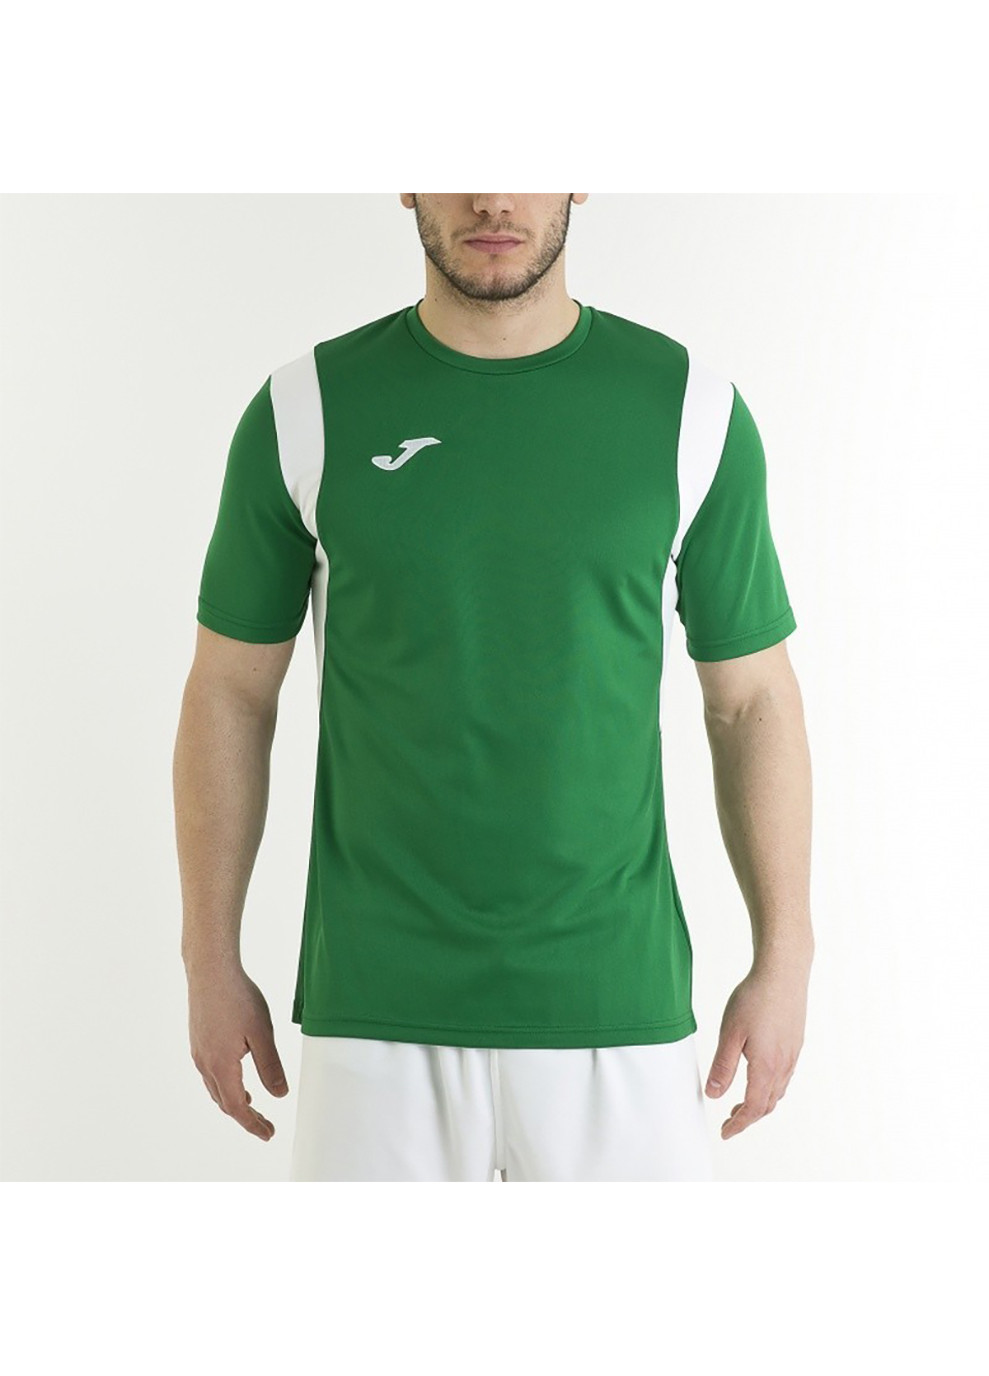 Зеленая футболка t-shirt dinamo green s/s зеленый 100446.450 Joma